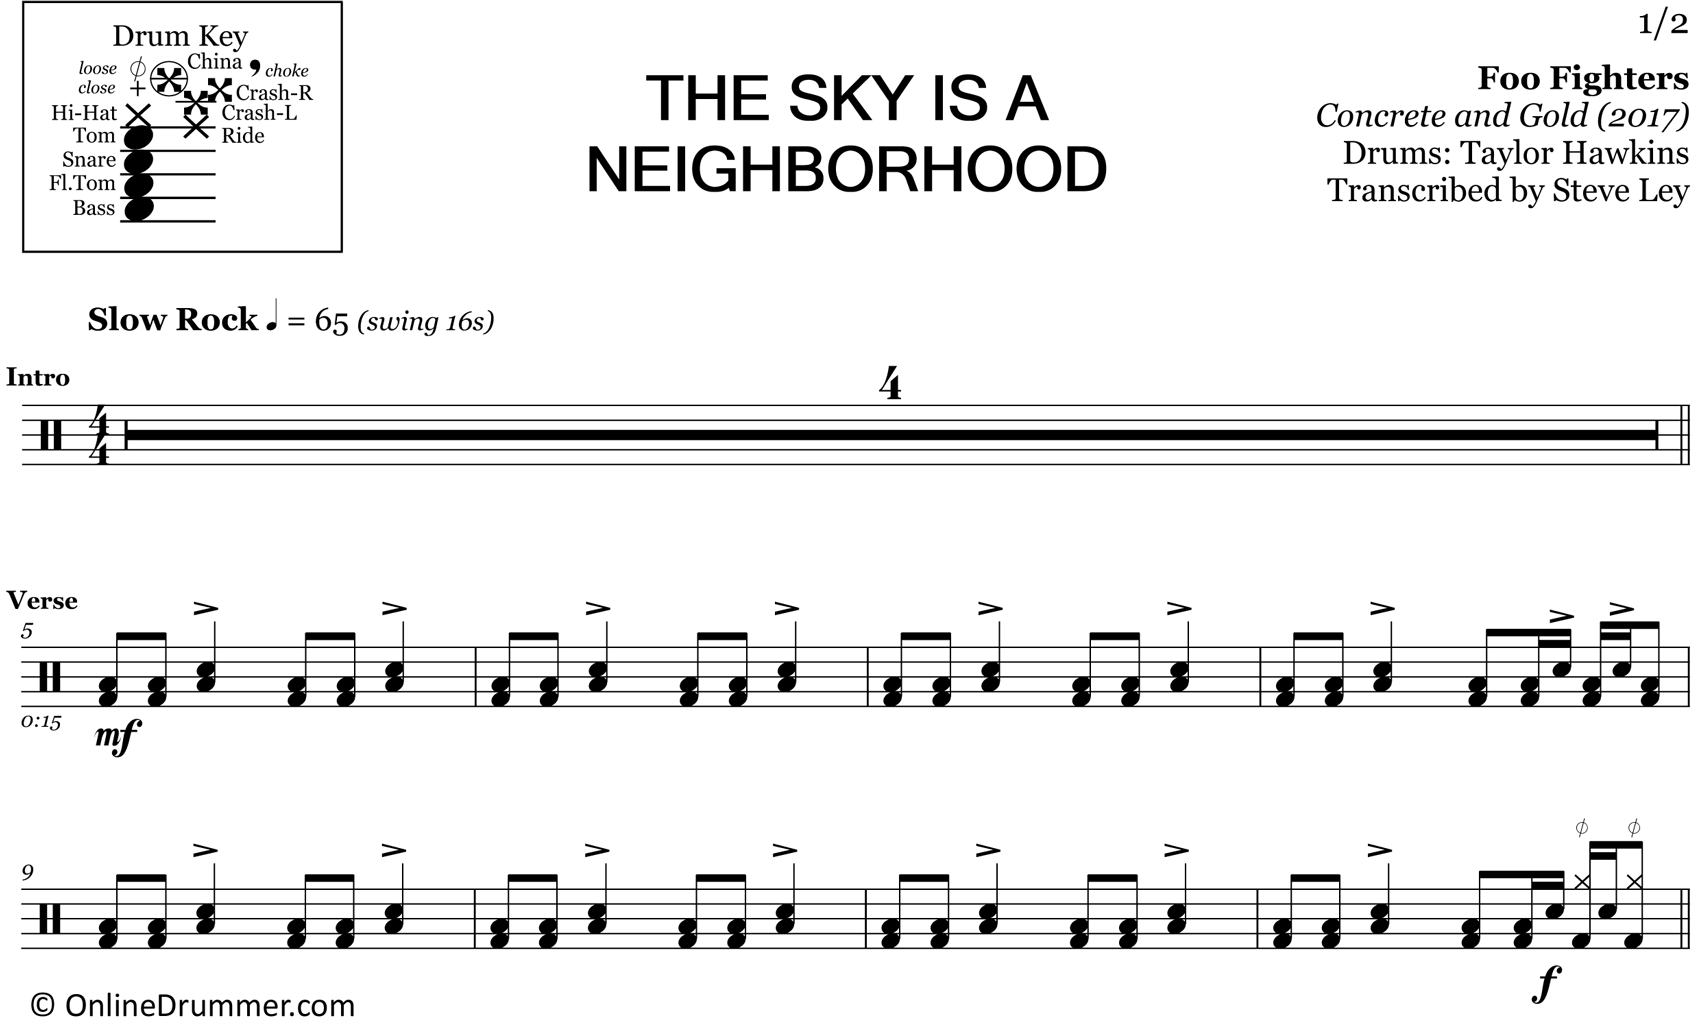 The Sky is a Neighborhood - Foo Fighters - Drum Sheet Music